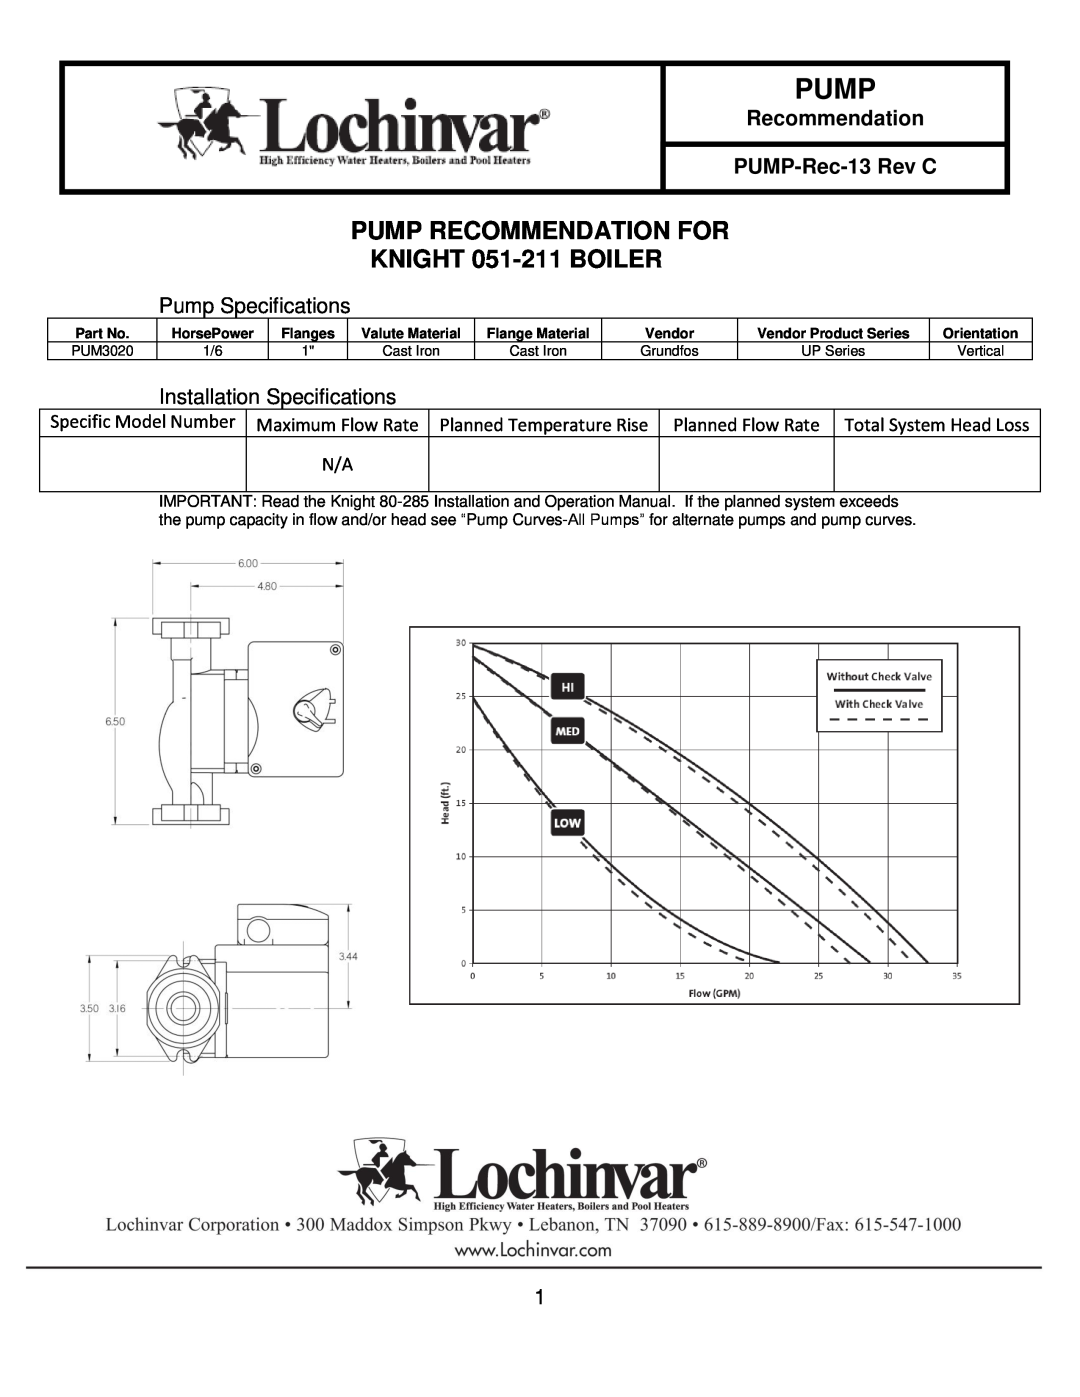 Lochinvar specifications Pump, PUMP RECOMMENDATION FOR KNIGHT 051-211 BOILER, Recommendation PUMP-Rec-13 Rev C 